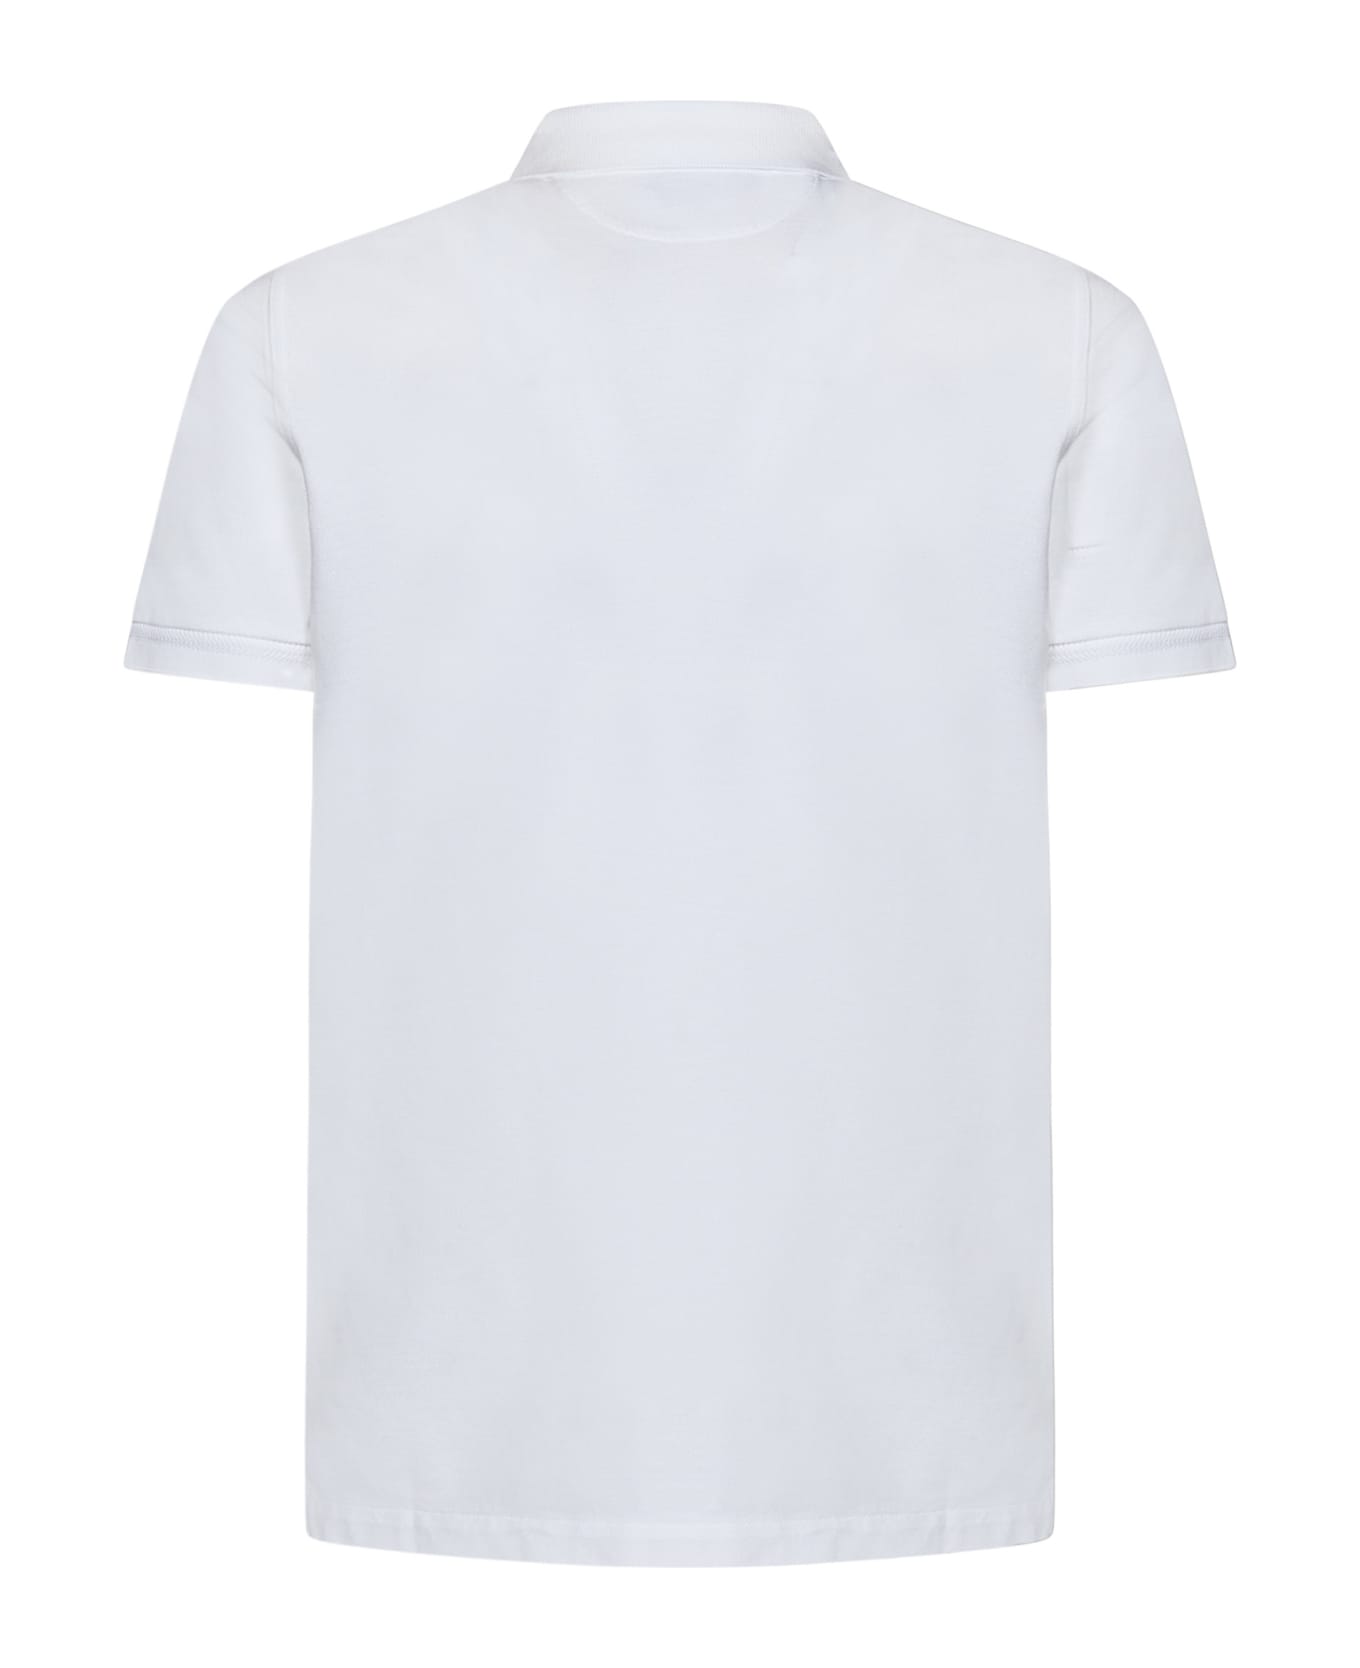 Tom Ford Polo Shirt - White